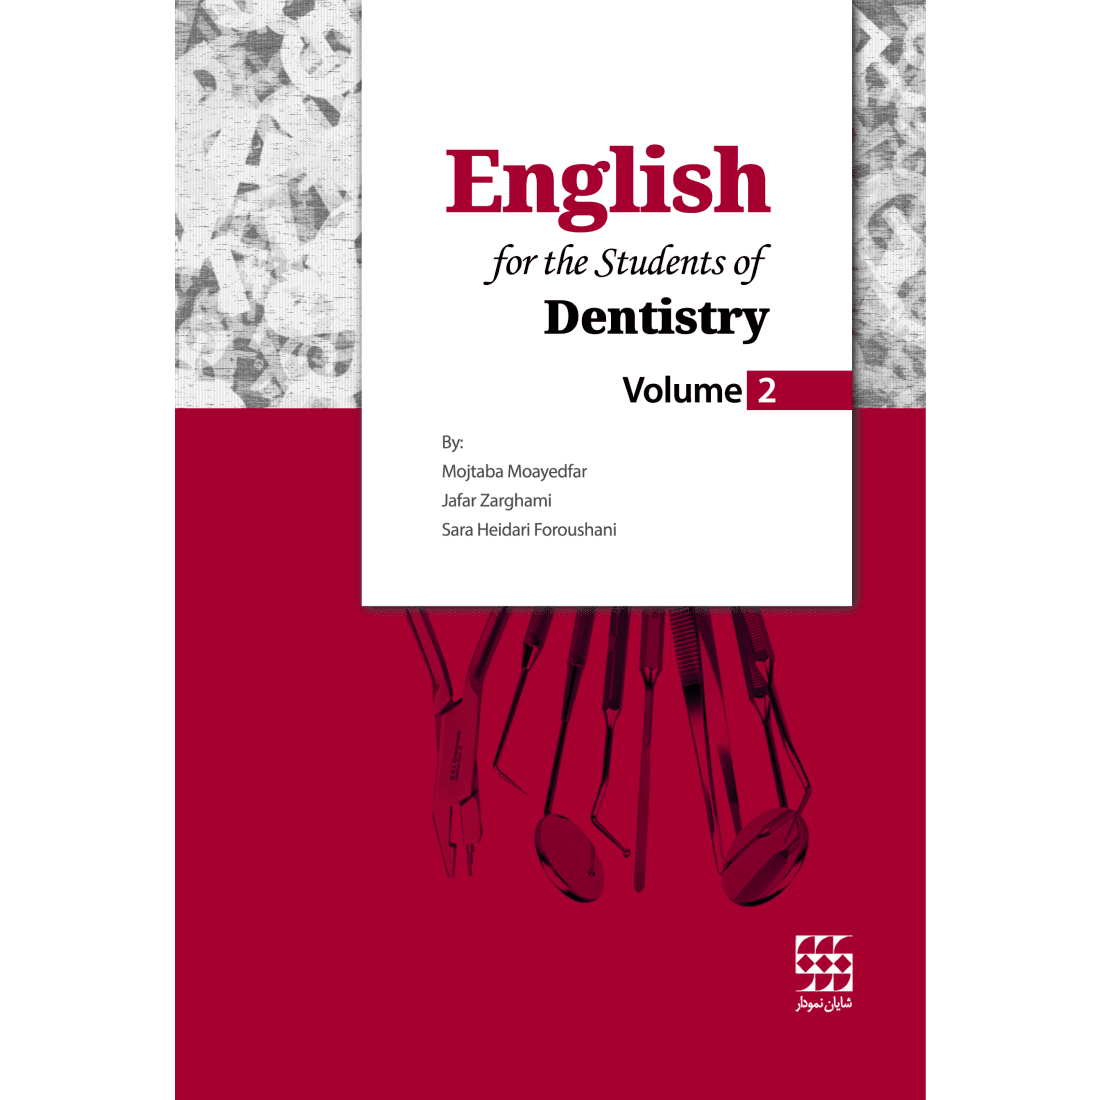 English for the students of Dentistry : volume 2 کتاب زبان انگلیسی برای دانشجویان دندانپزشکی - جلد دوم | انتشارات شایان نمودار